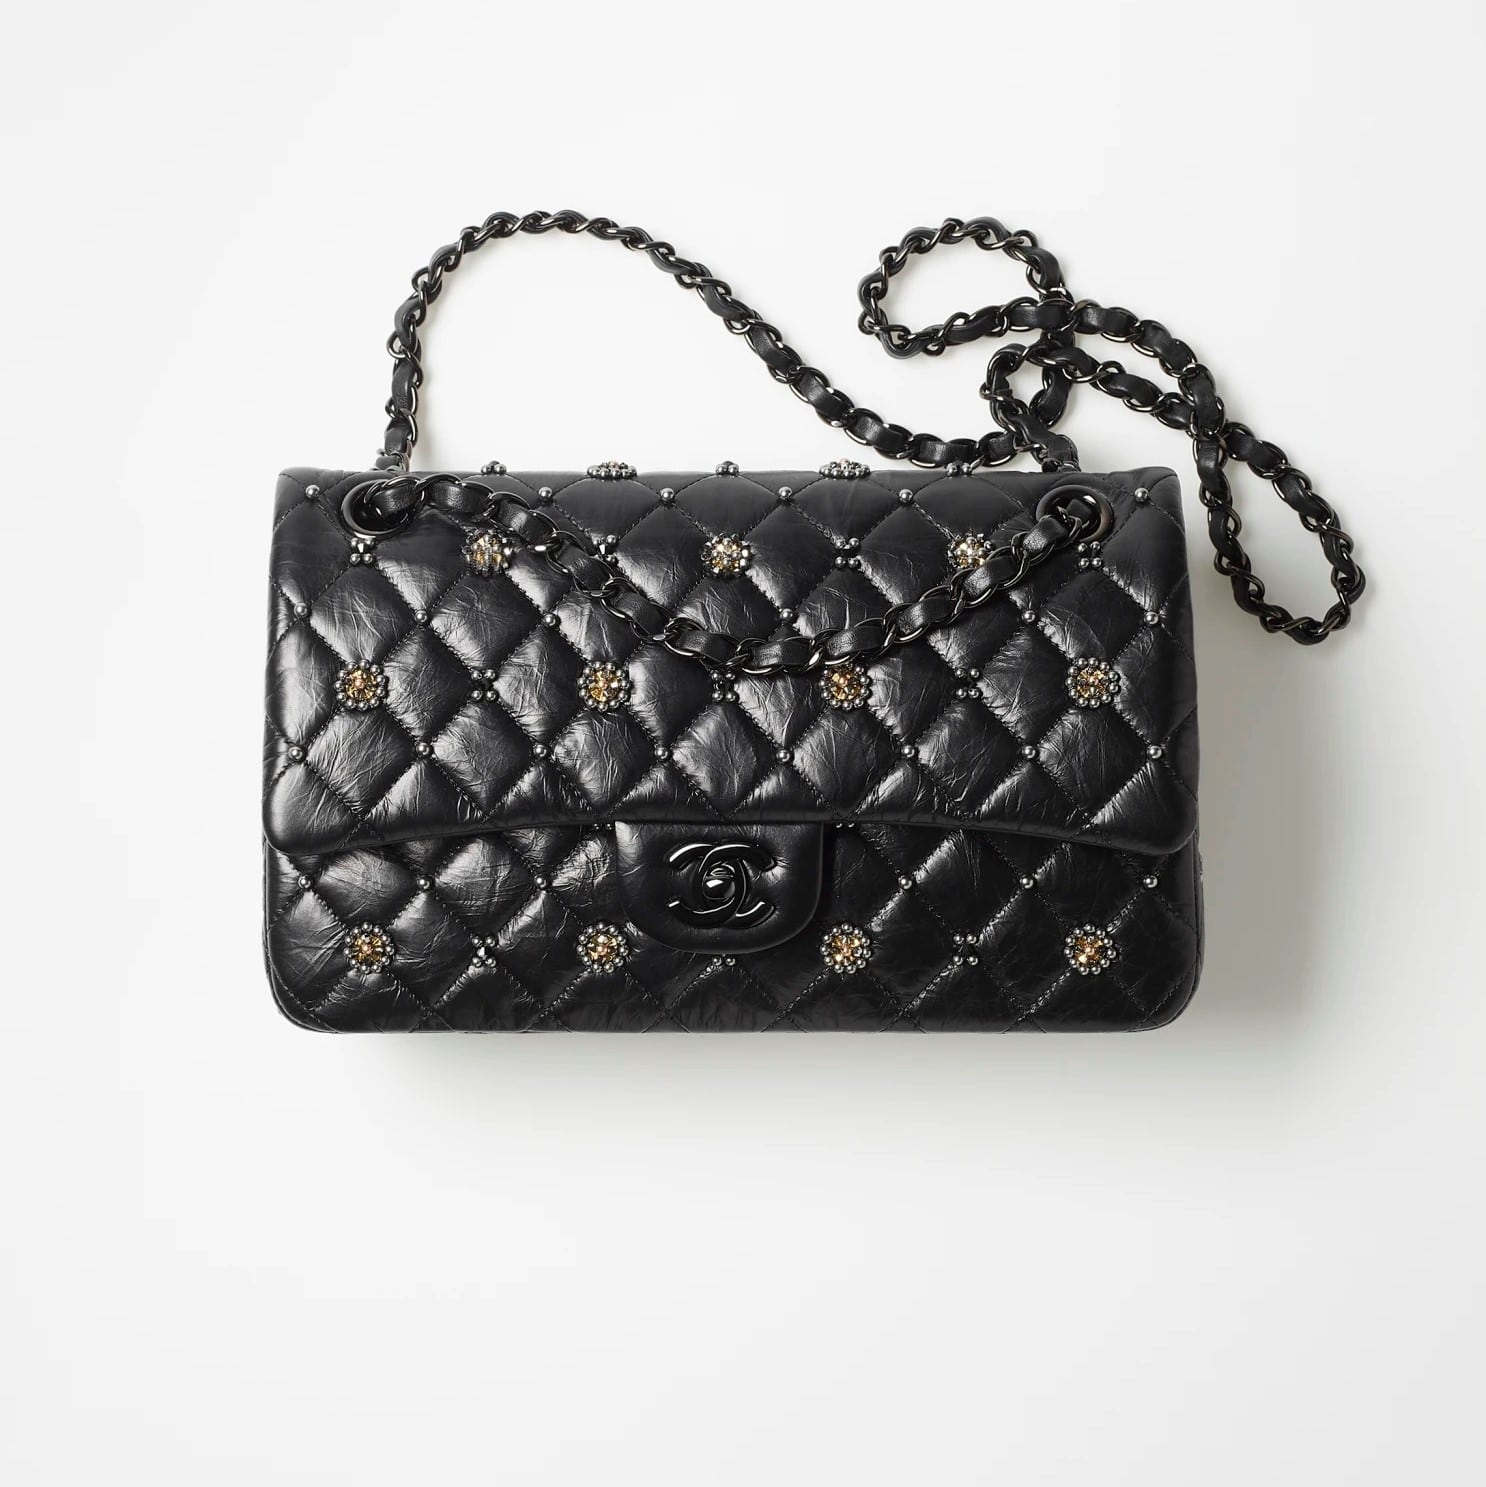 Chanel Black Shiny Crumpled Calfskin Classic Handbag